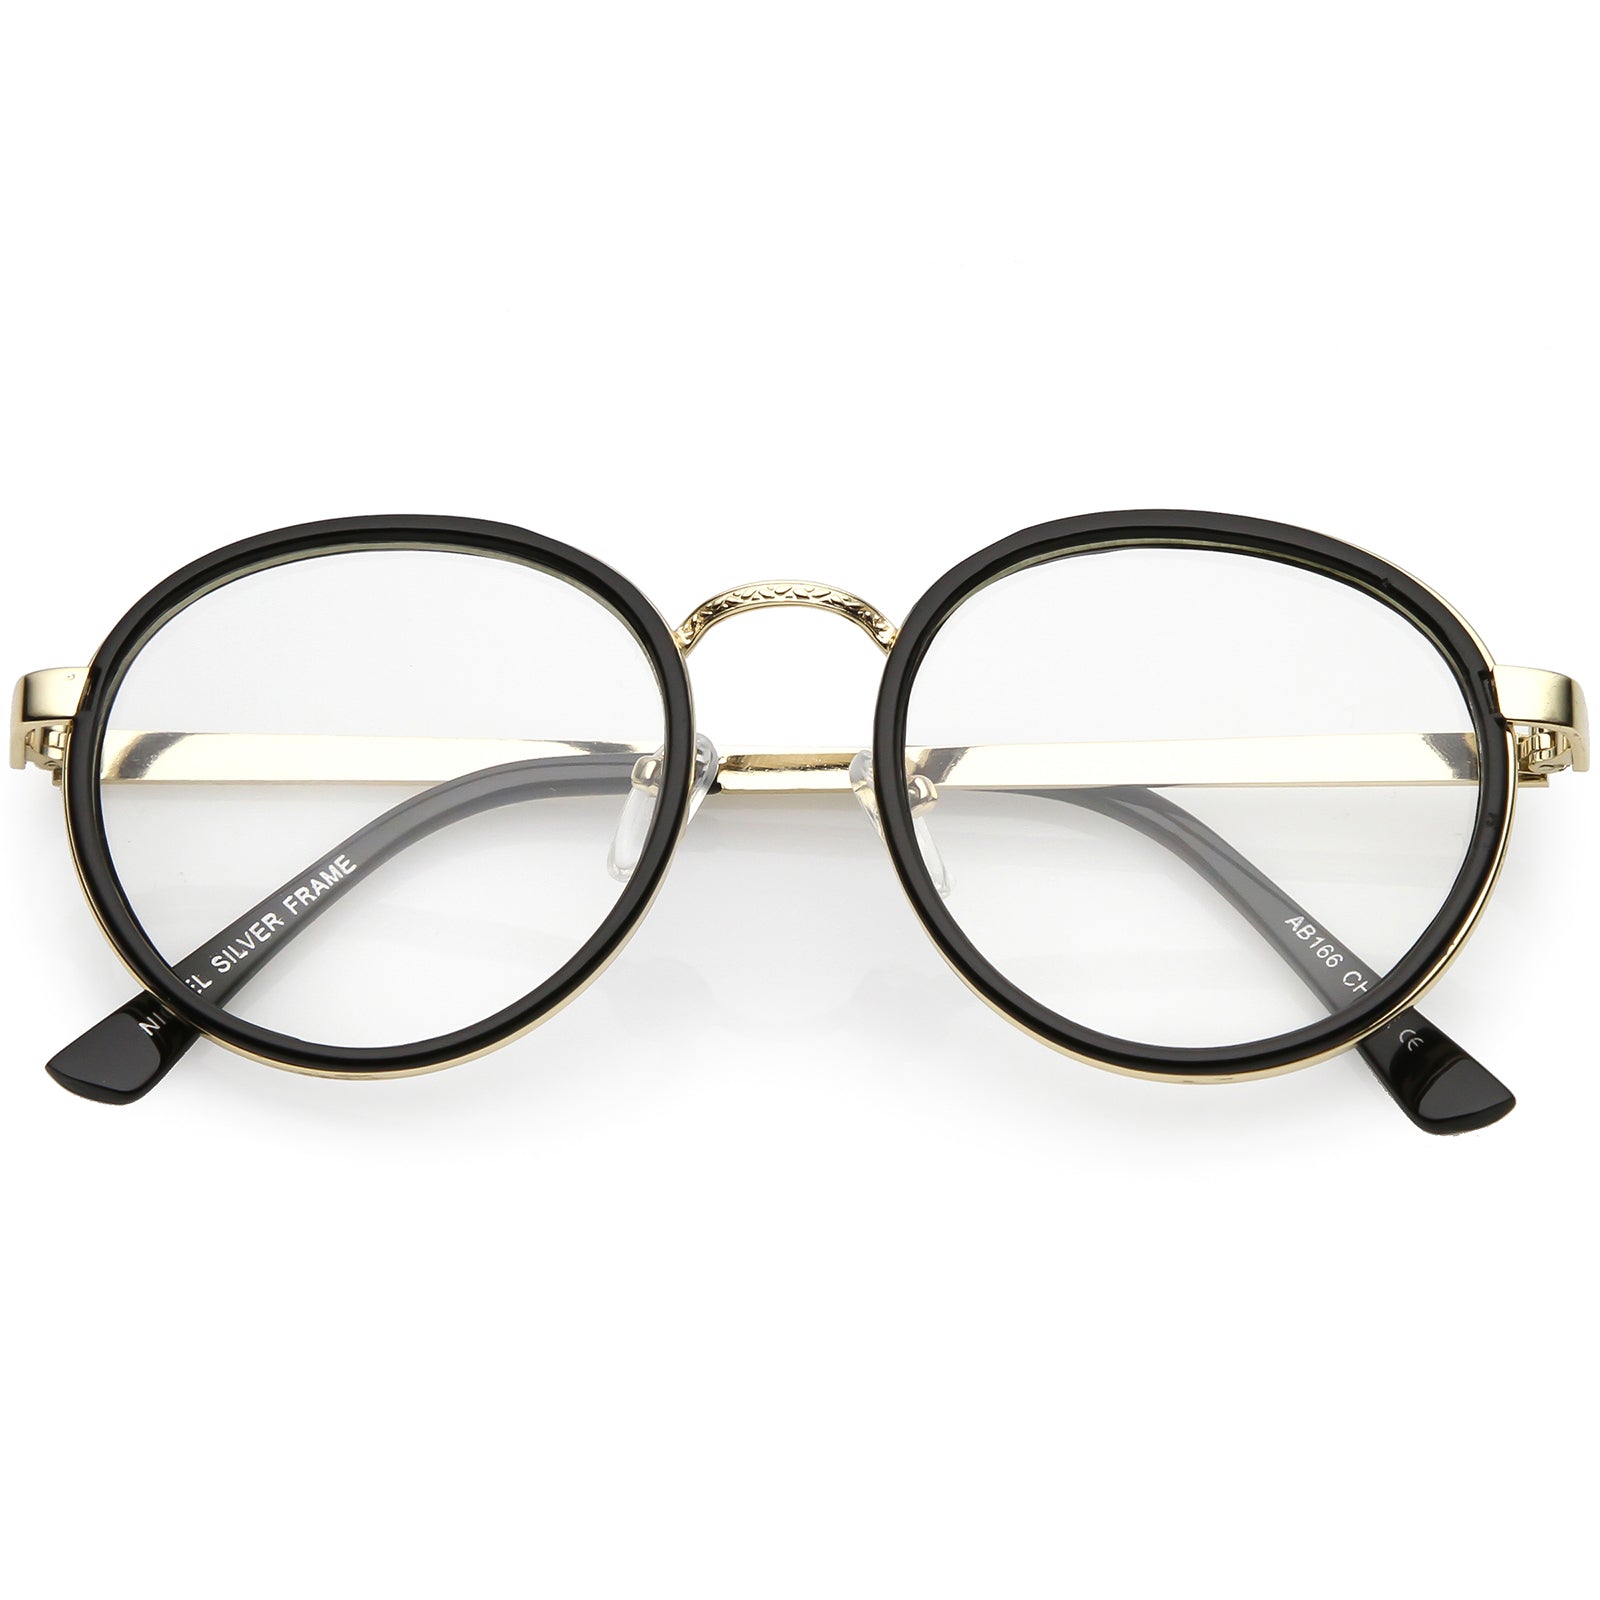 classic round eyeglasses